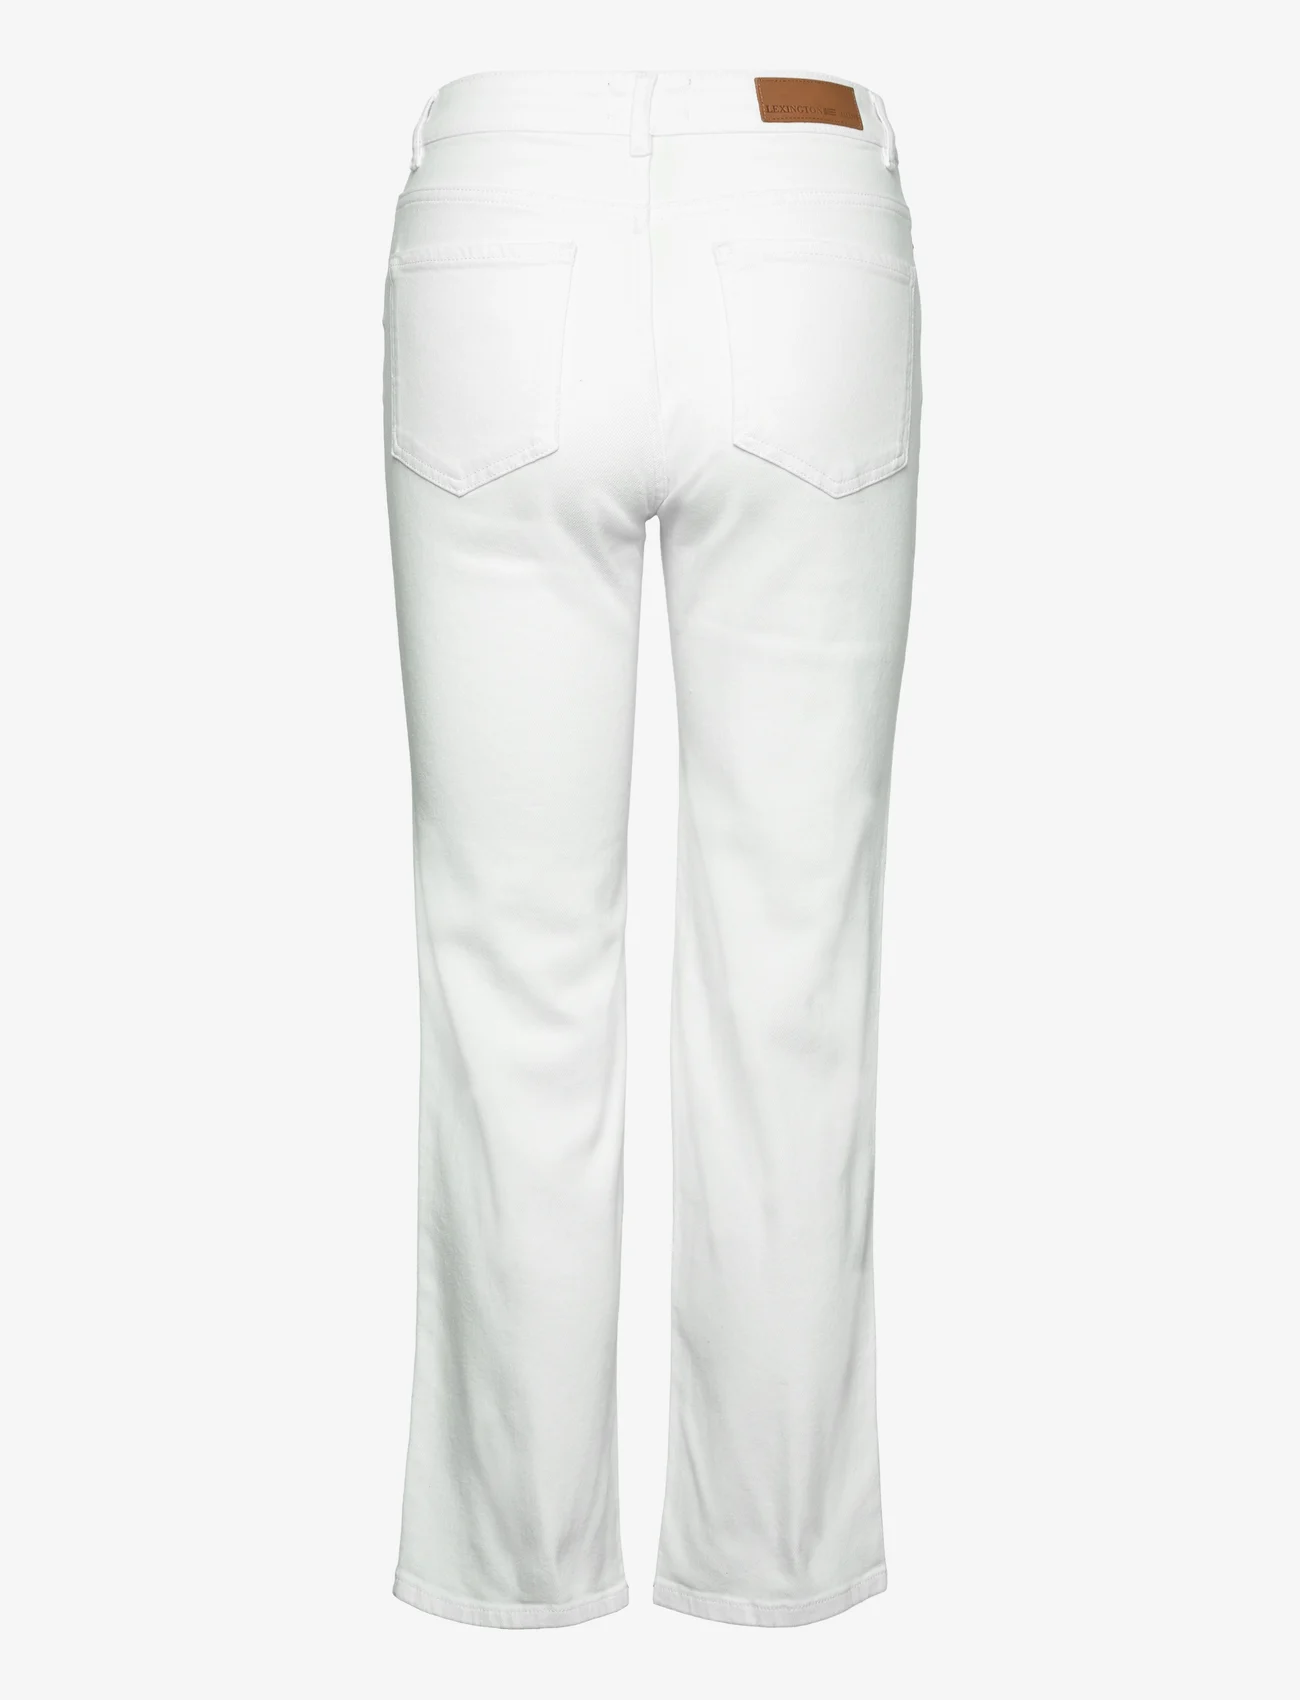 Lexington Clothing - Natalia High-Rise Straight-Leg Jeans - tiesaus kirpimo džinsai - white - 1